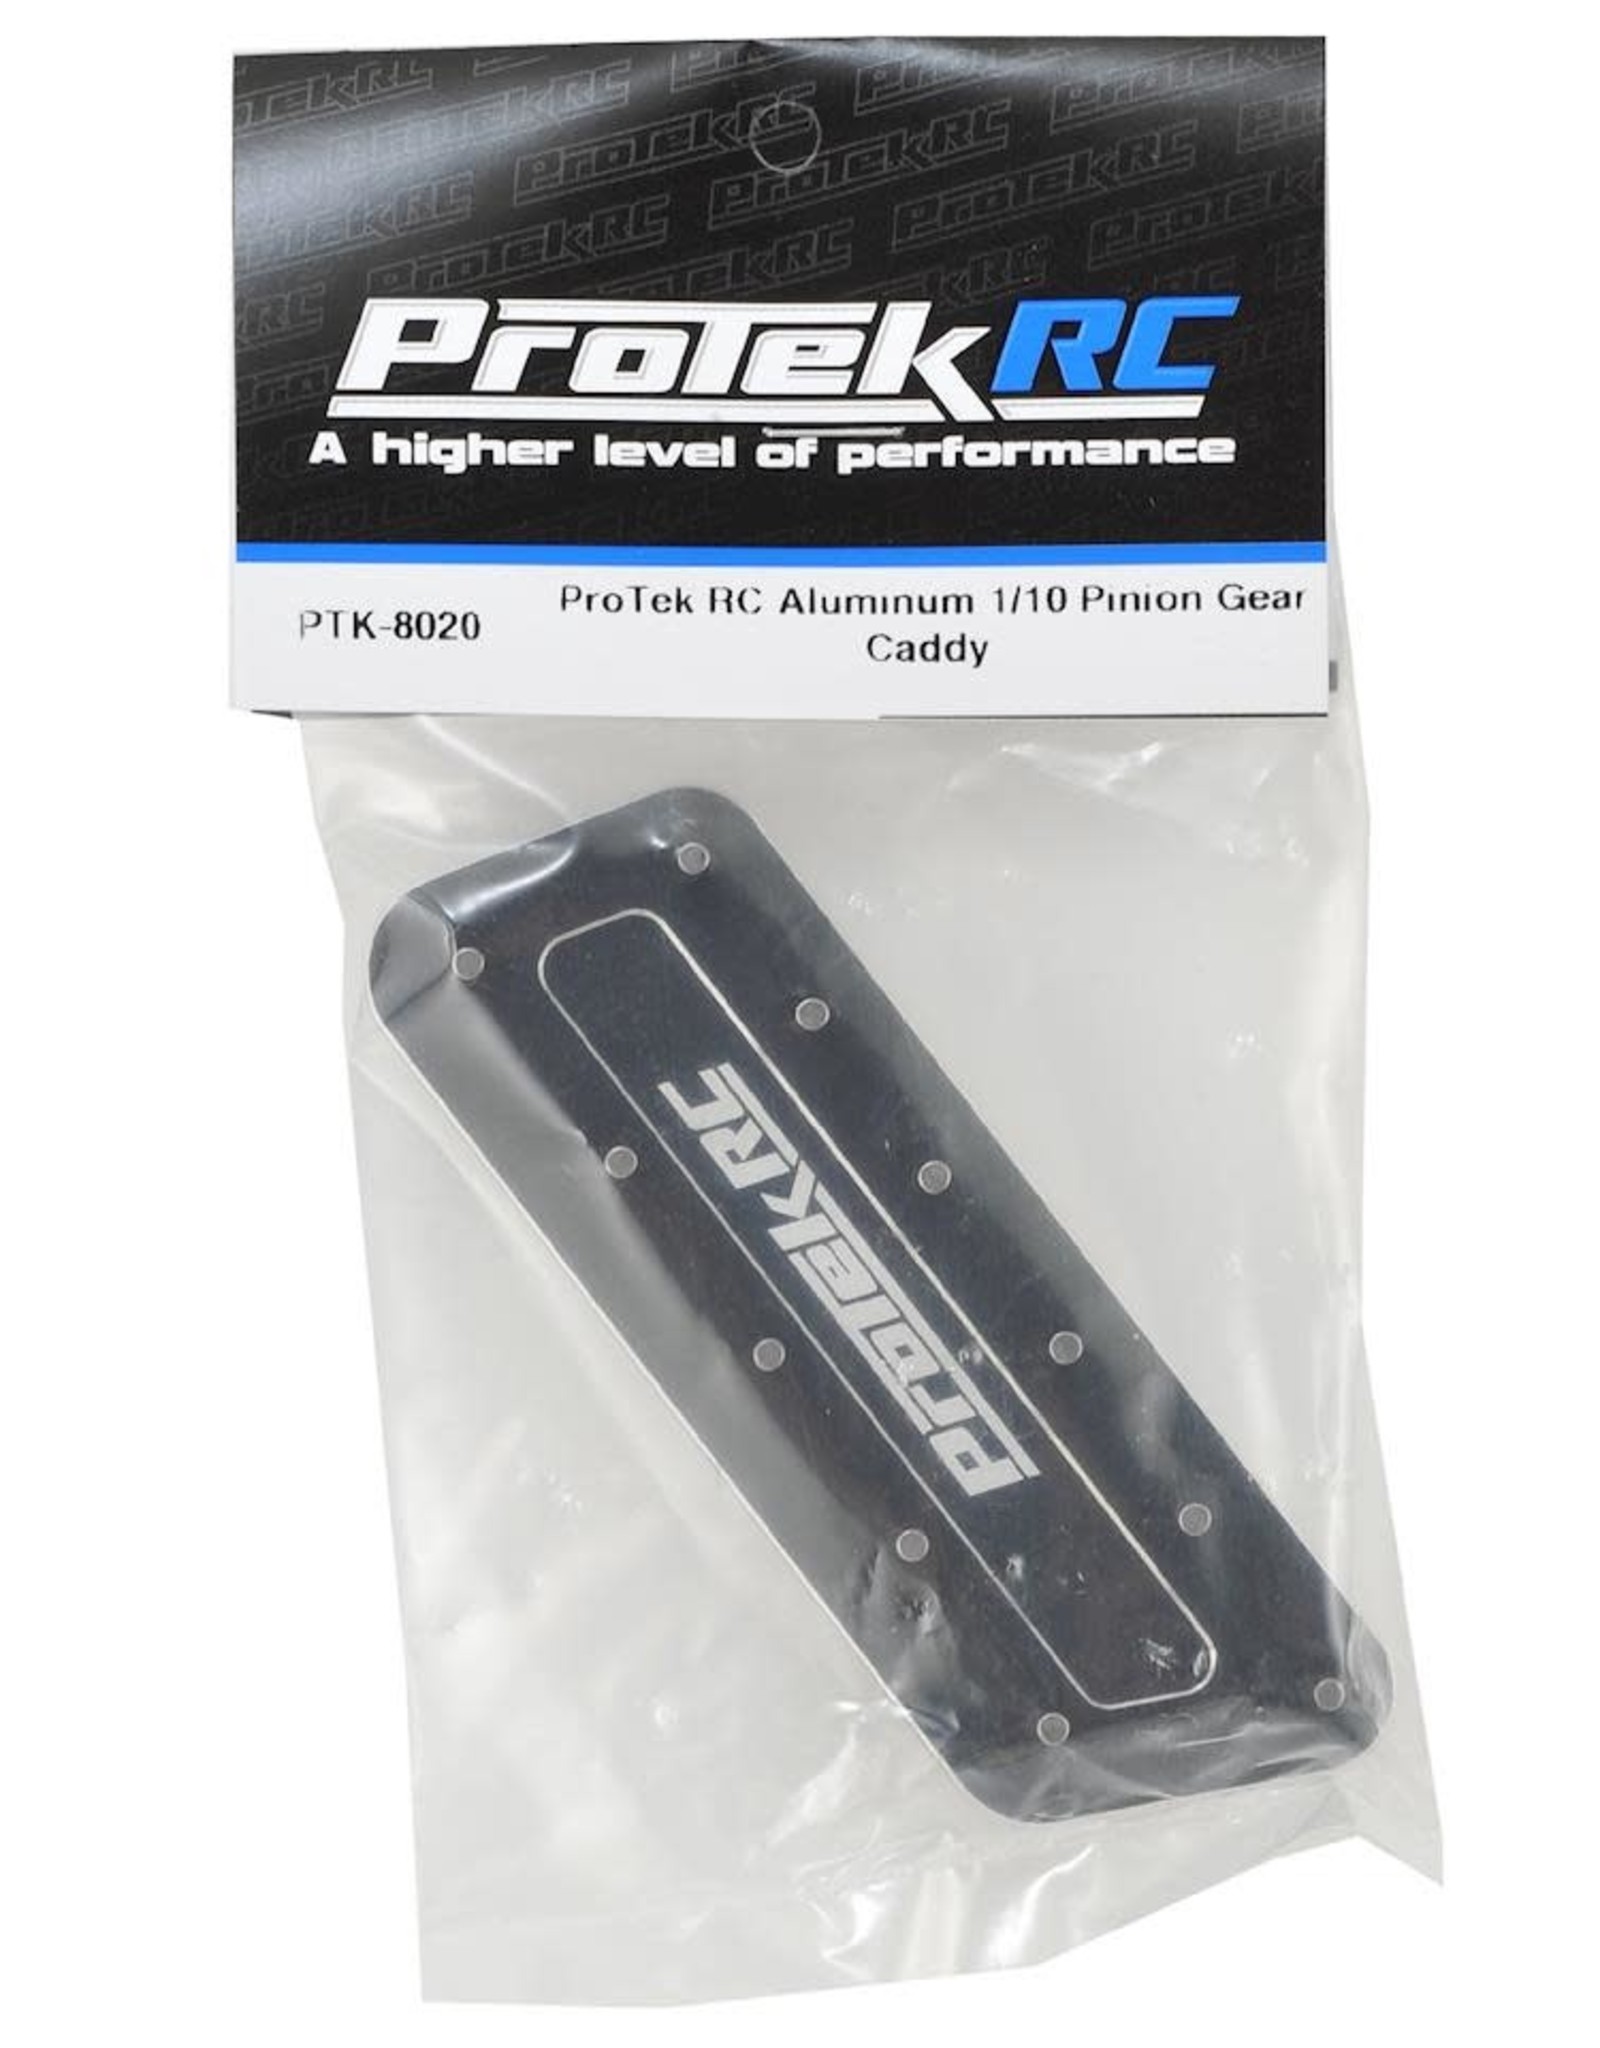 Protek RC ProTek RC Aluminum 1/10 Pinion Gear Caddy [PTK-8020]